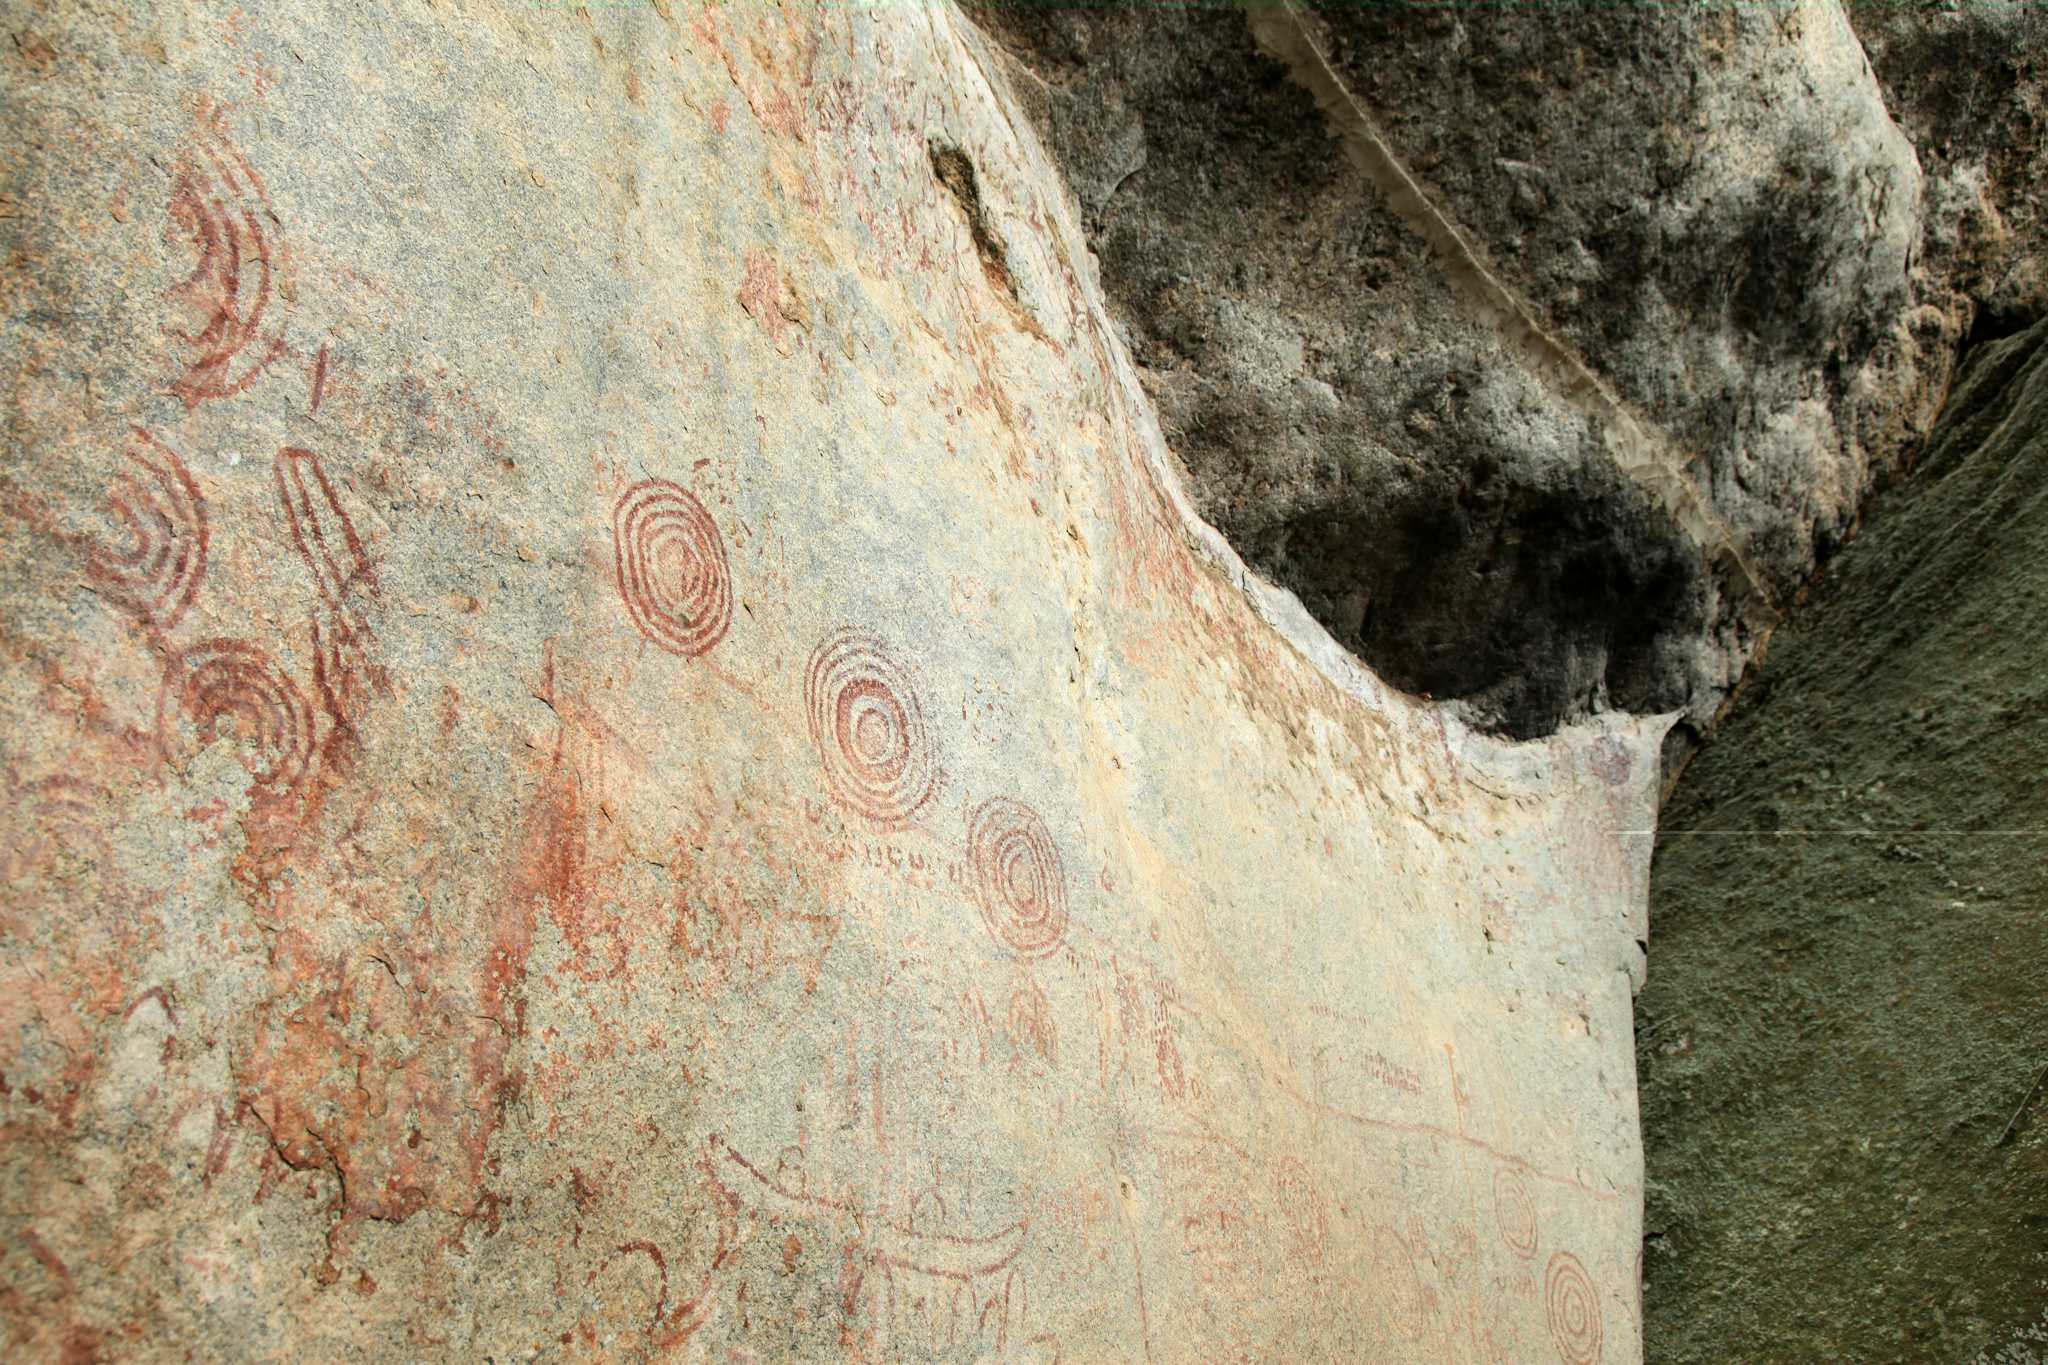 Nyero Rock Paintings